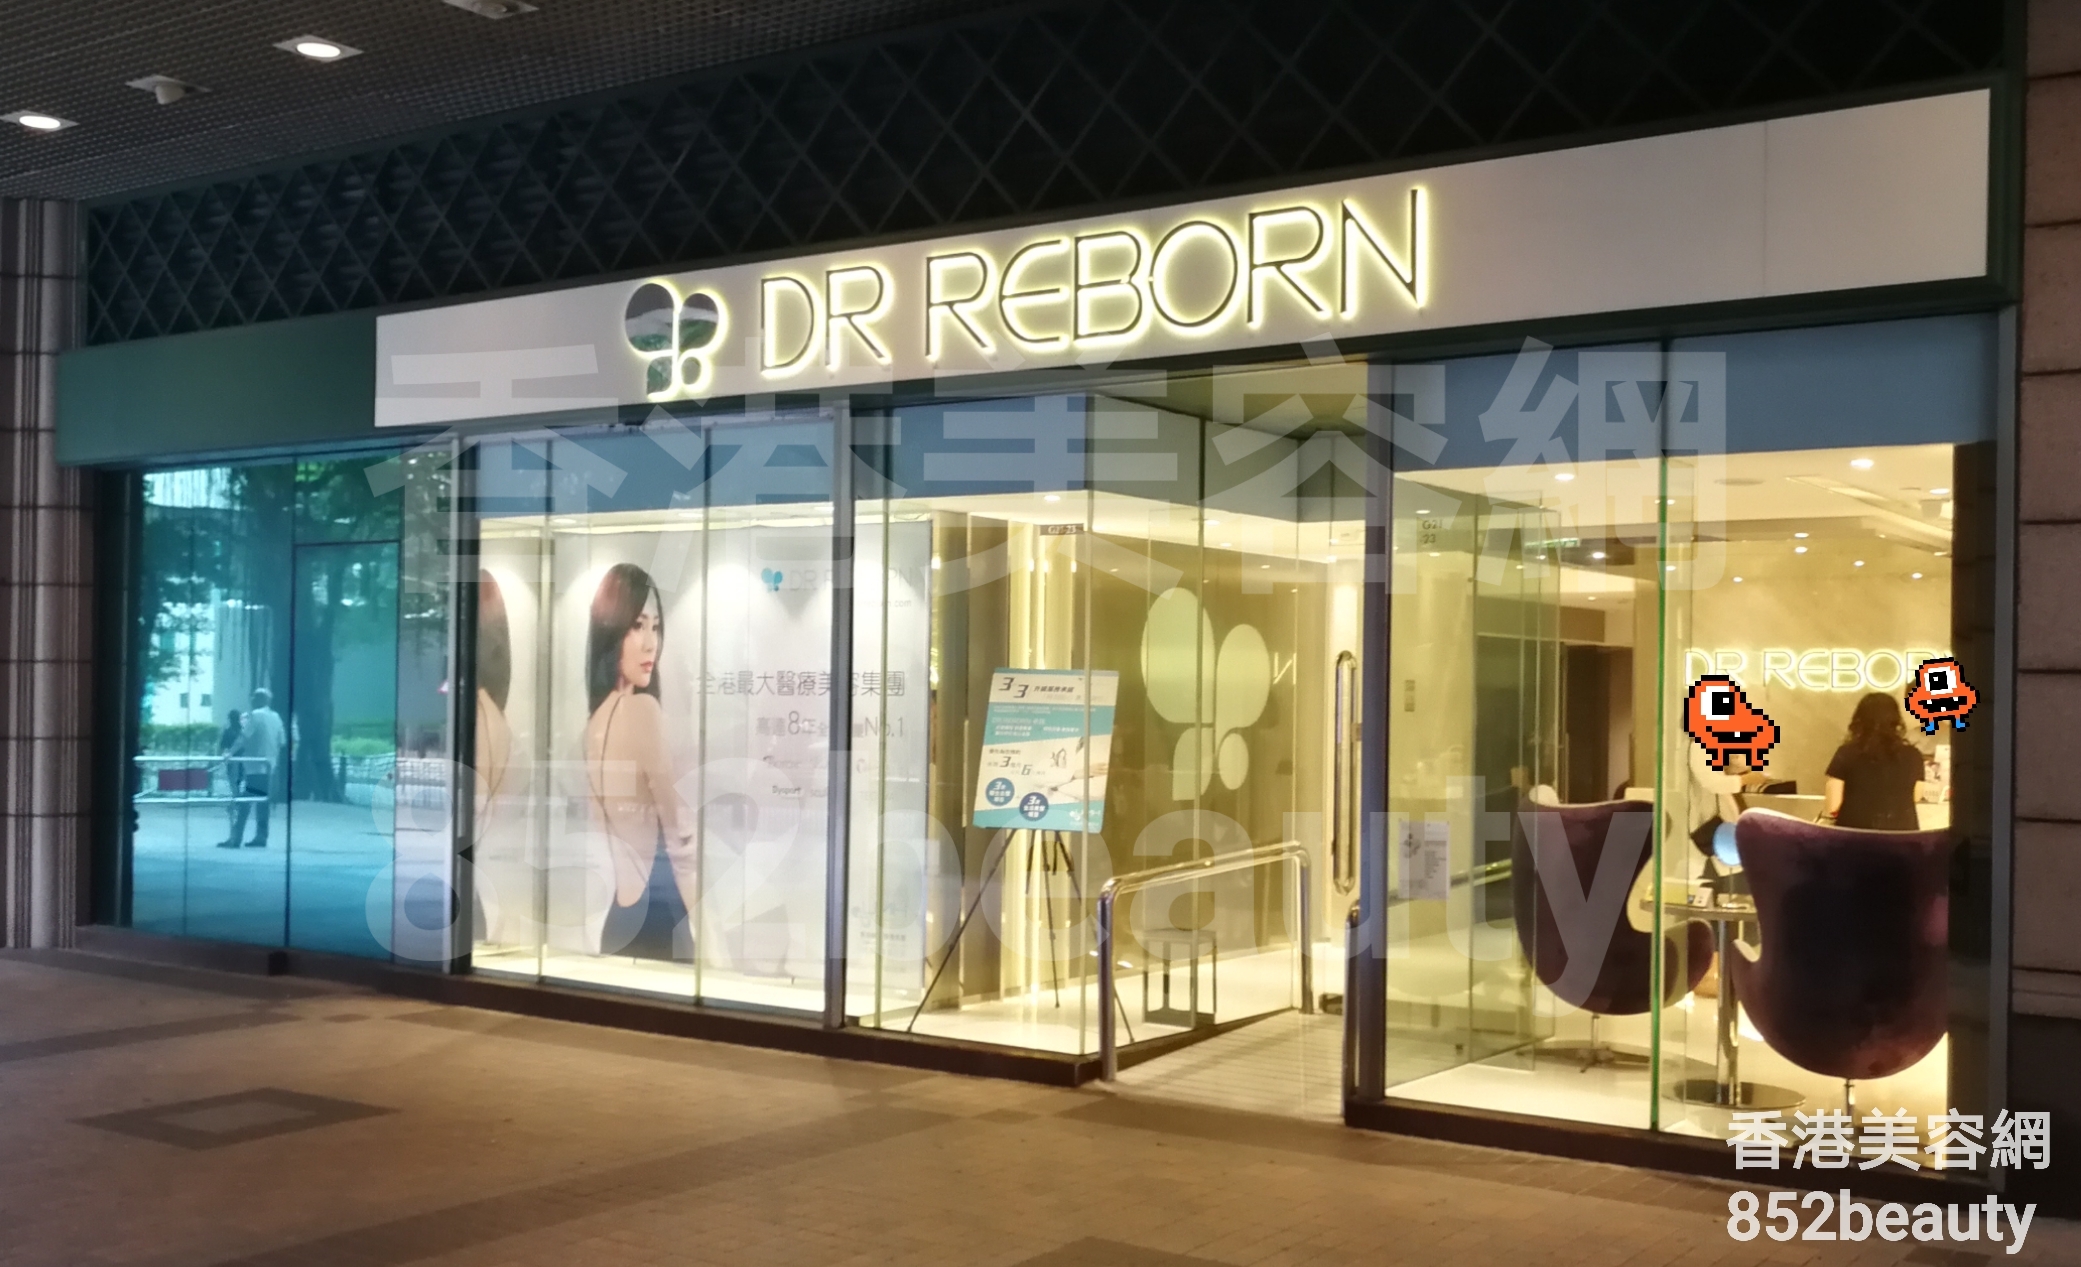 Hair Removal: DR REBORN (將軍澳)